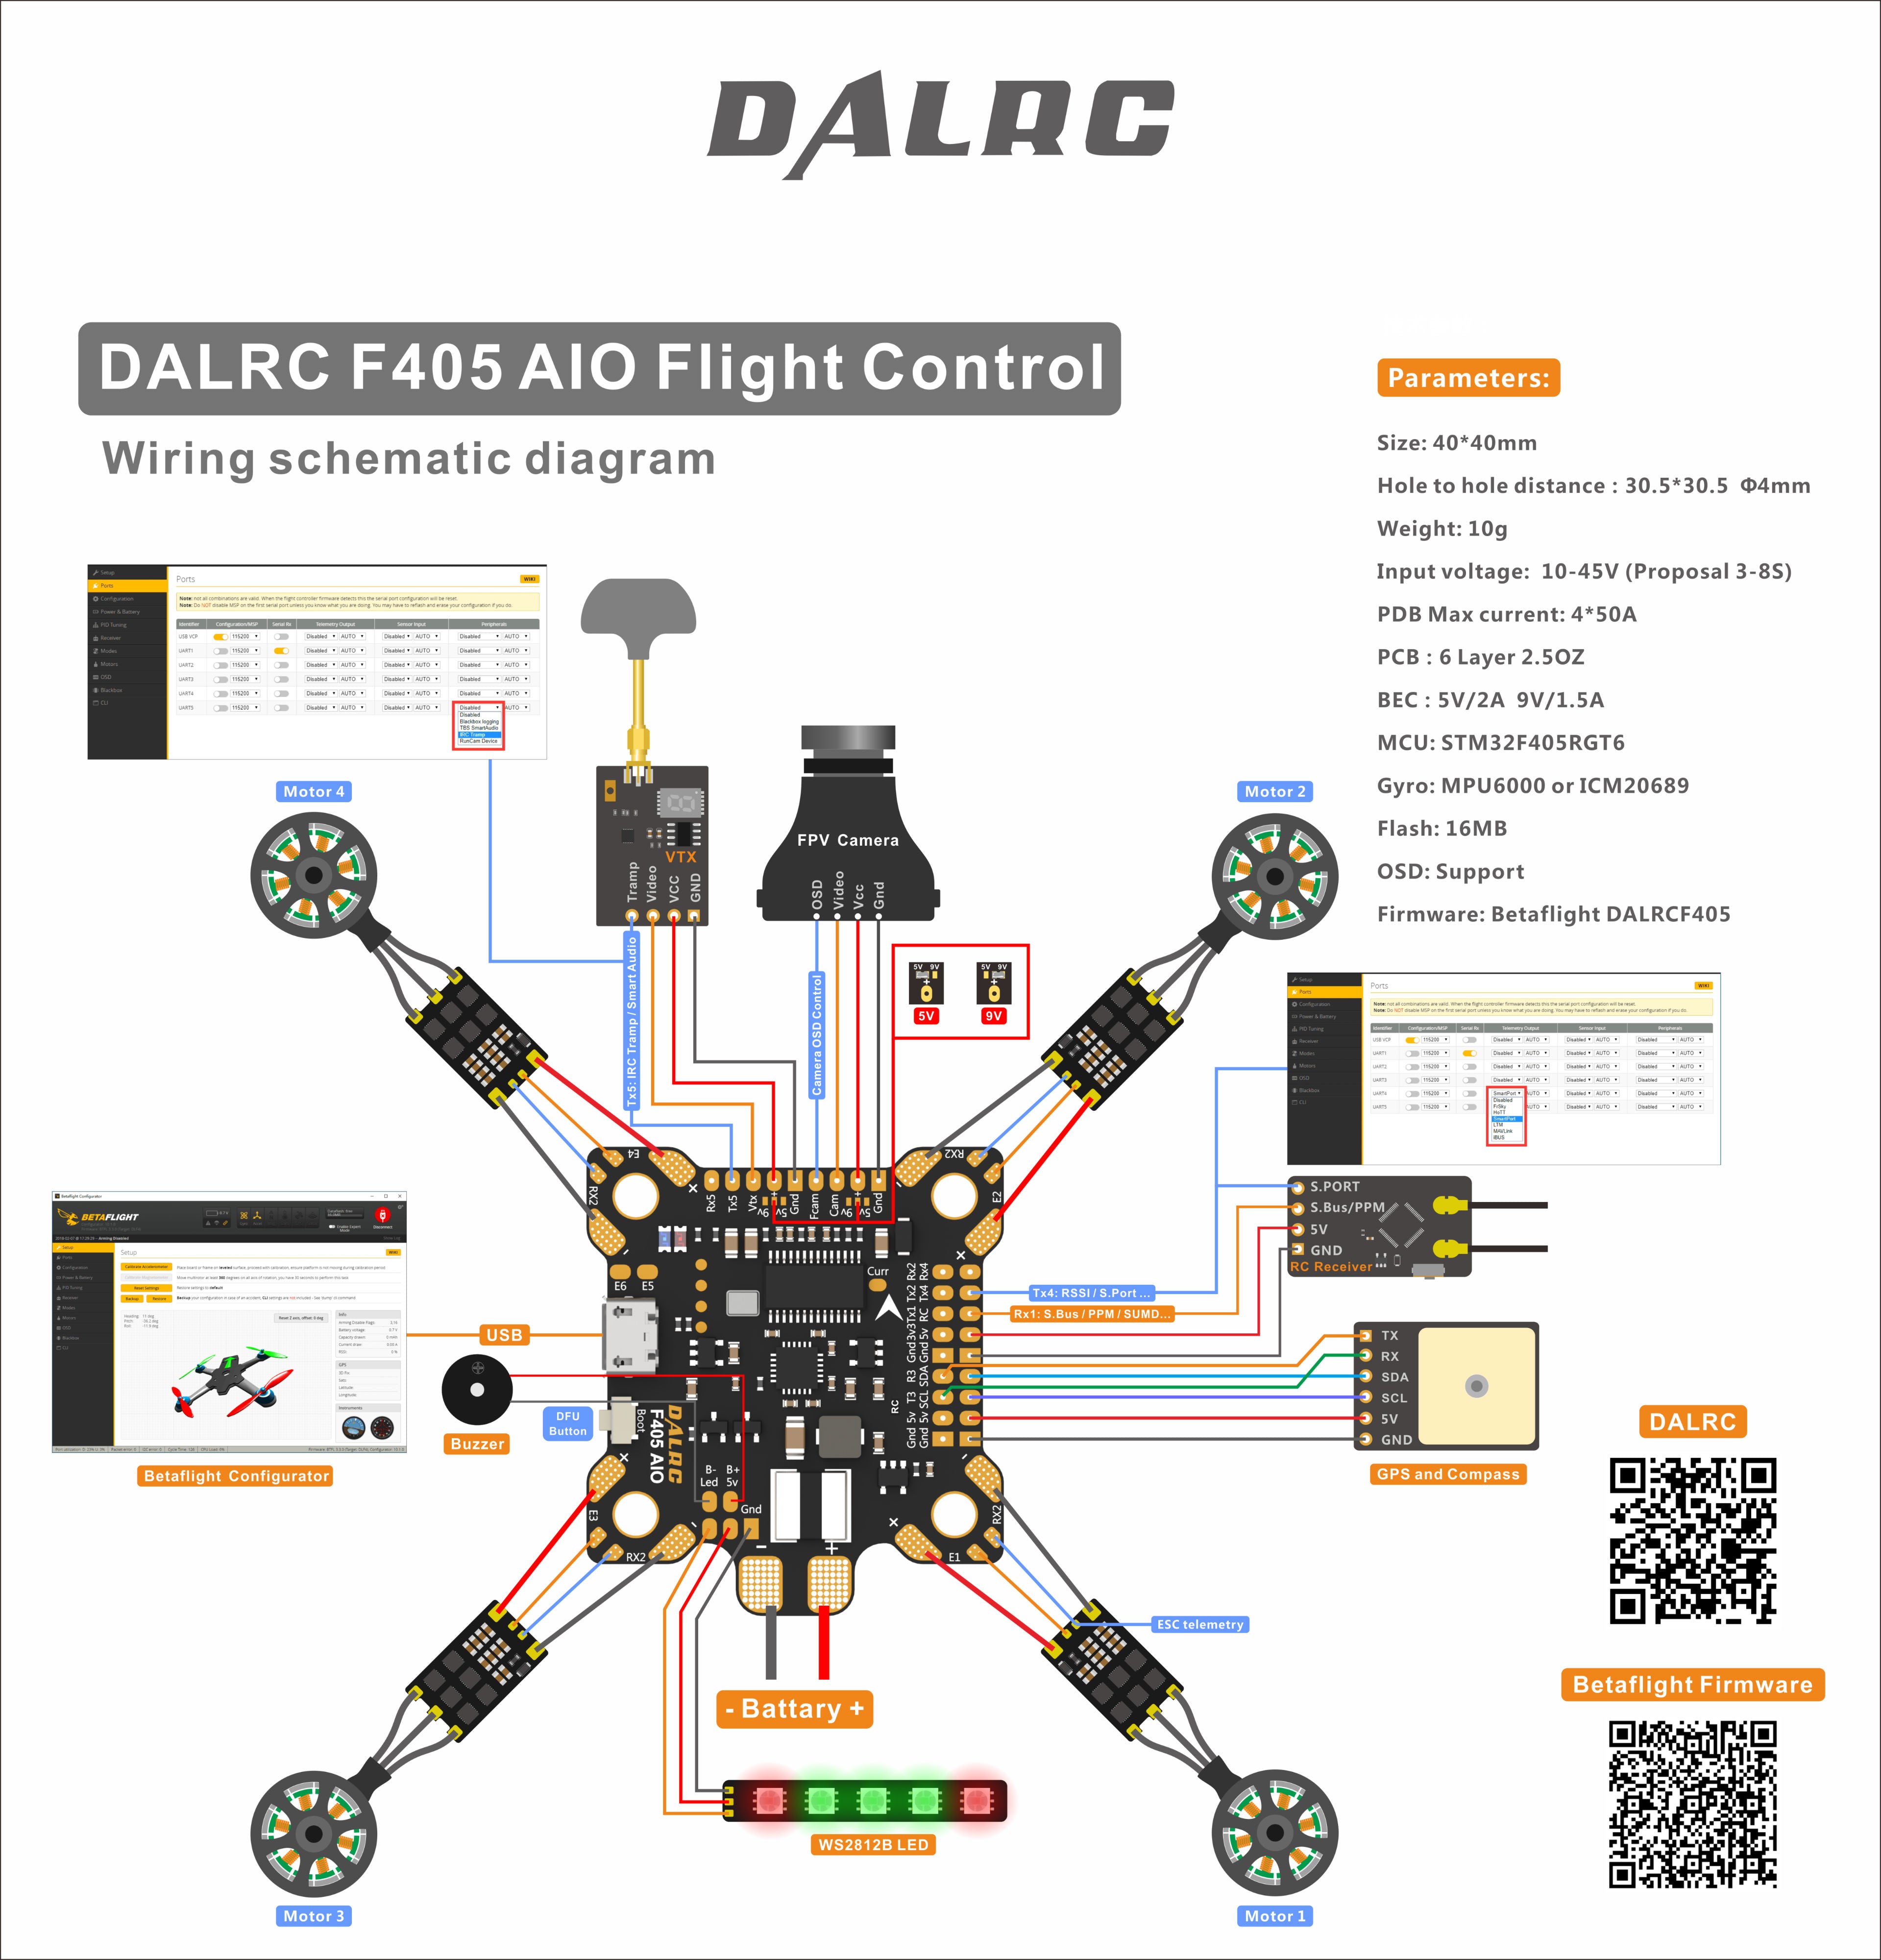 DALRC F405 AIO Flight Controller